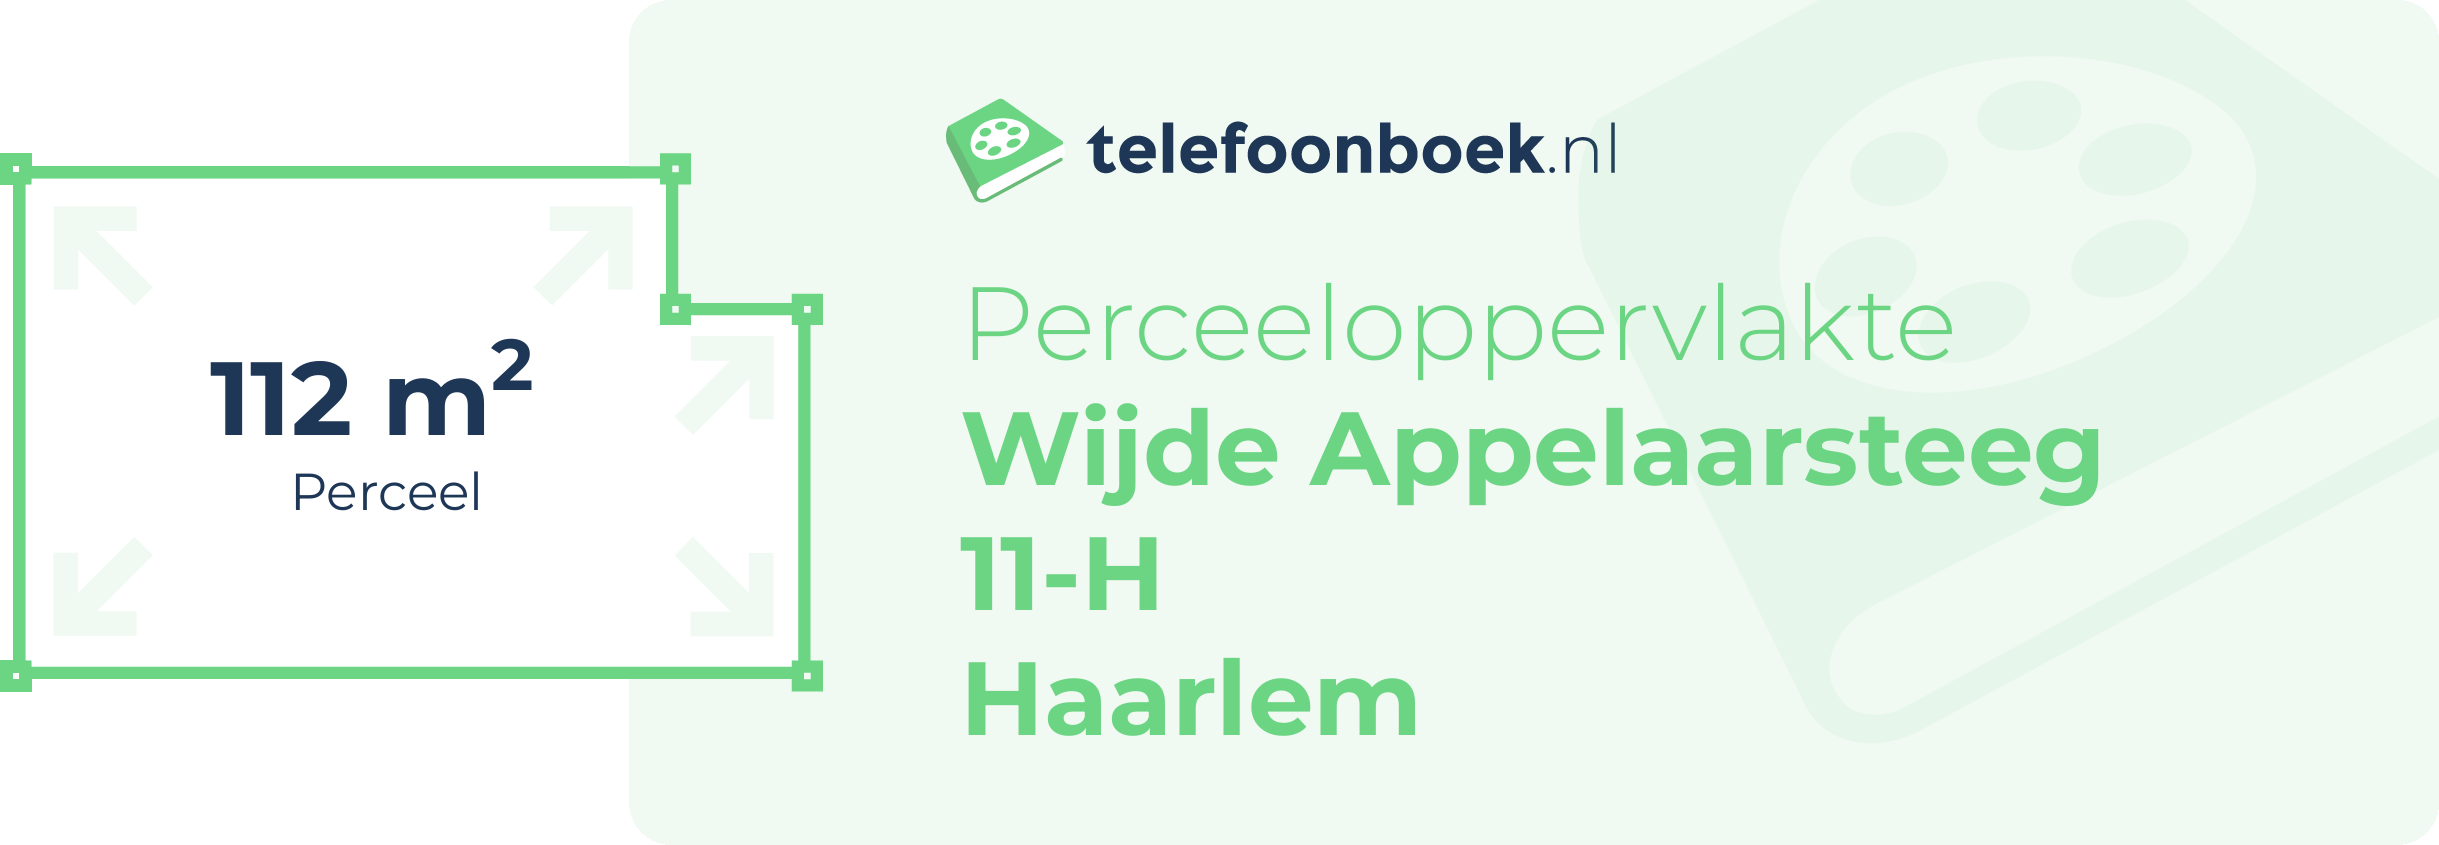 Perceeloppervlakte Wijde Appelaarsteeg 11-H Haarlem